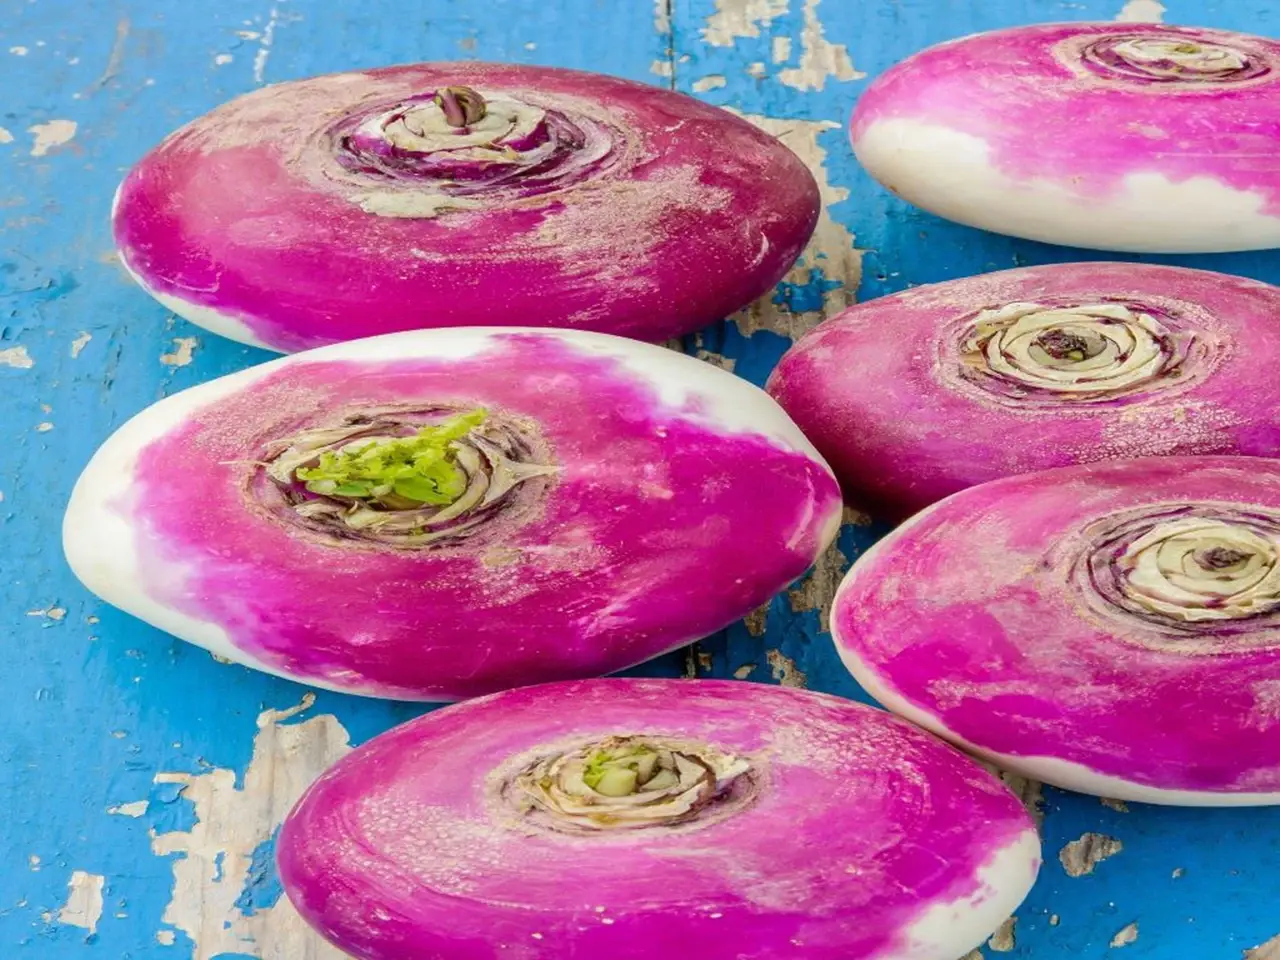 Turnip or shalgam